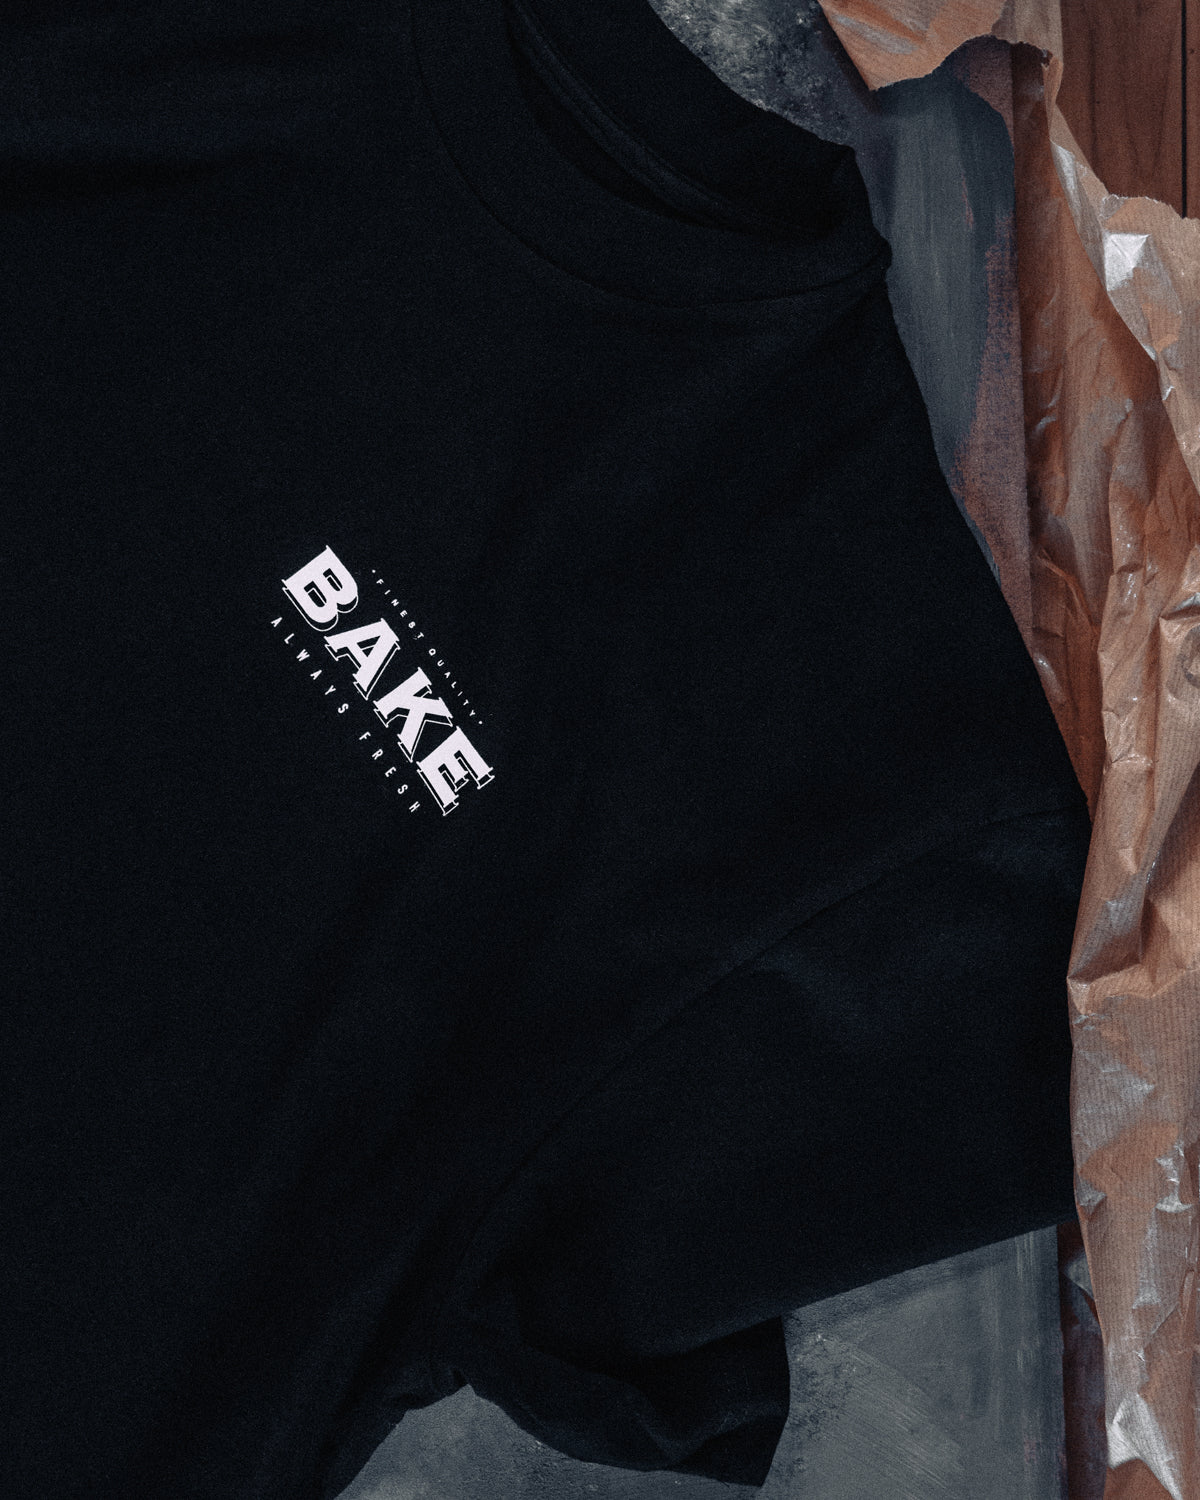 the Bakerman black box-cut T-shirt